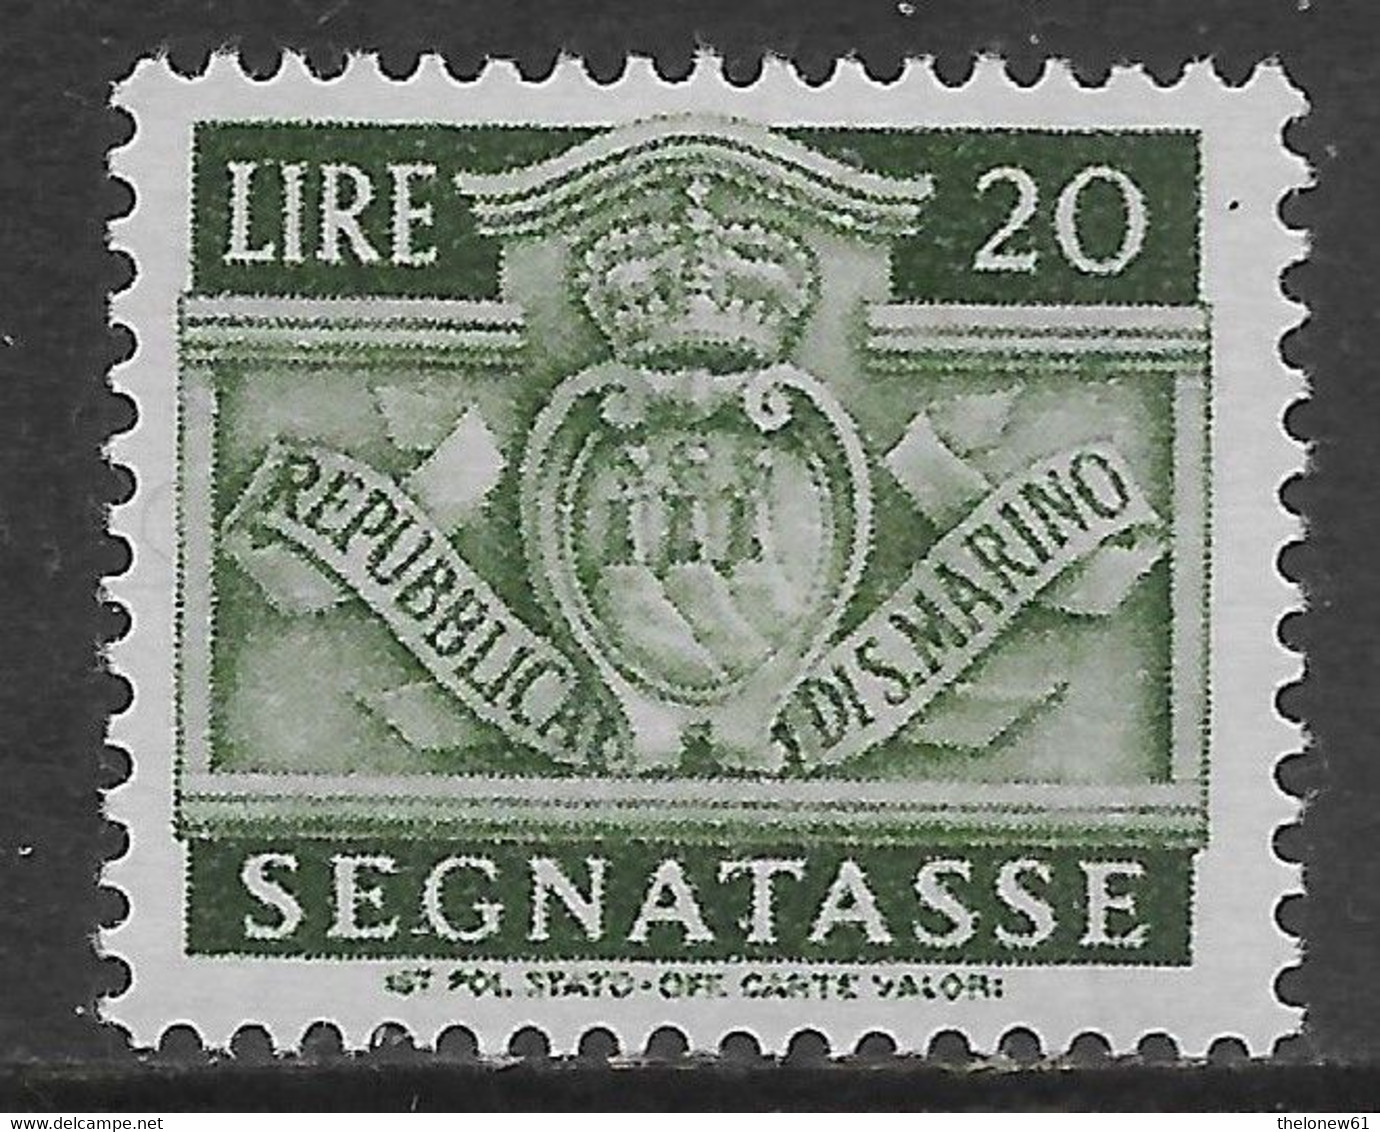 San Marino 1945 Segnatasse Stemma L20 Sa N.S78 Nuovo MH * - Timbres-taxe